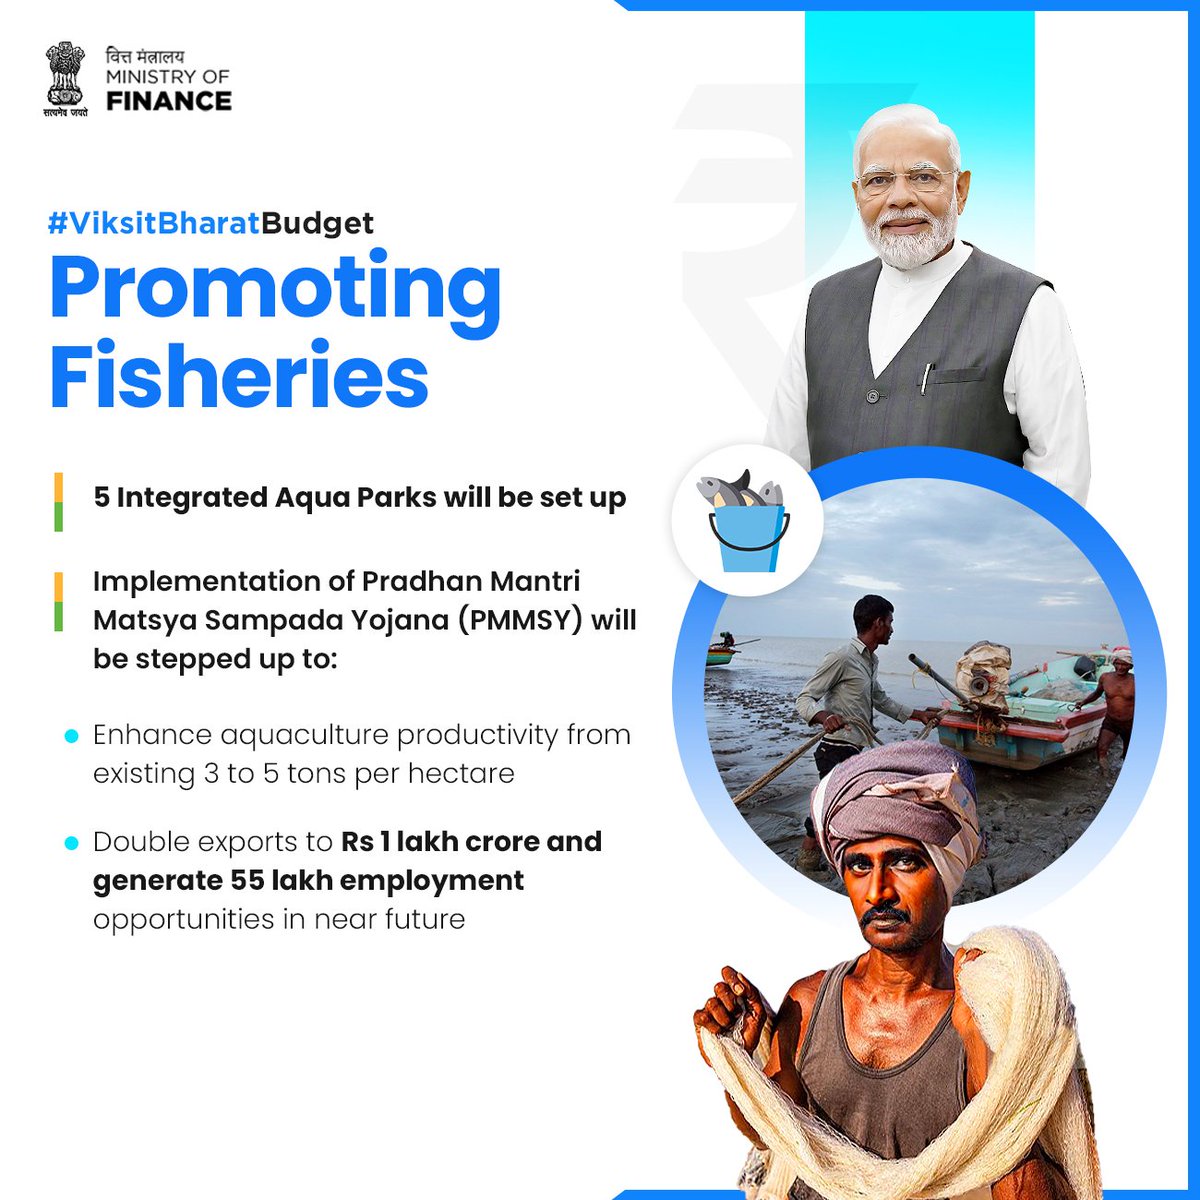 Promoting fisheries by stepping up Pradhan Mantri Matya Sampada Yojana (PMMSY).
#ViksitBharatBudget